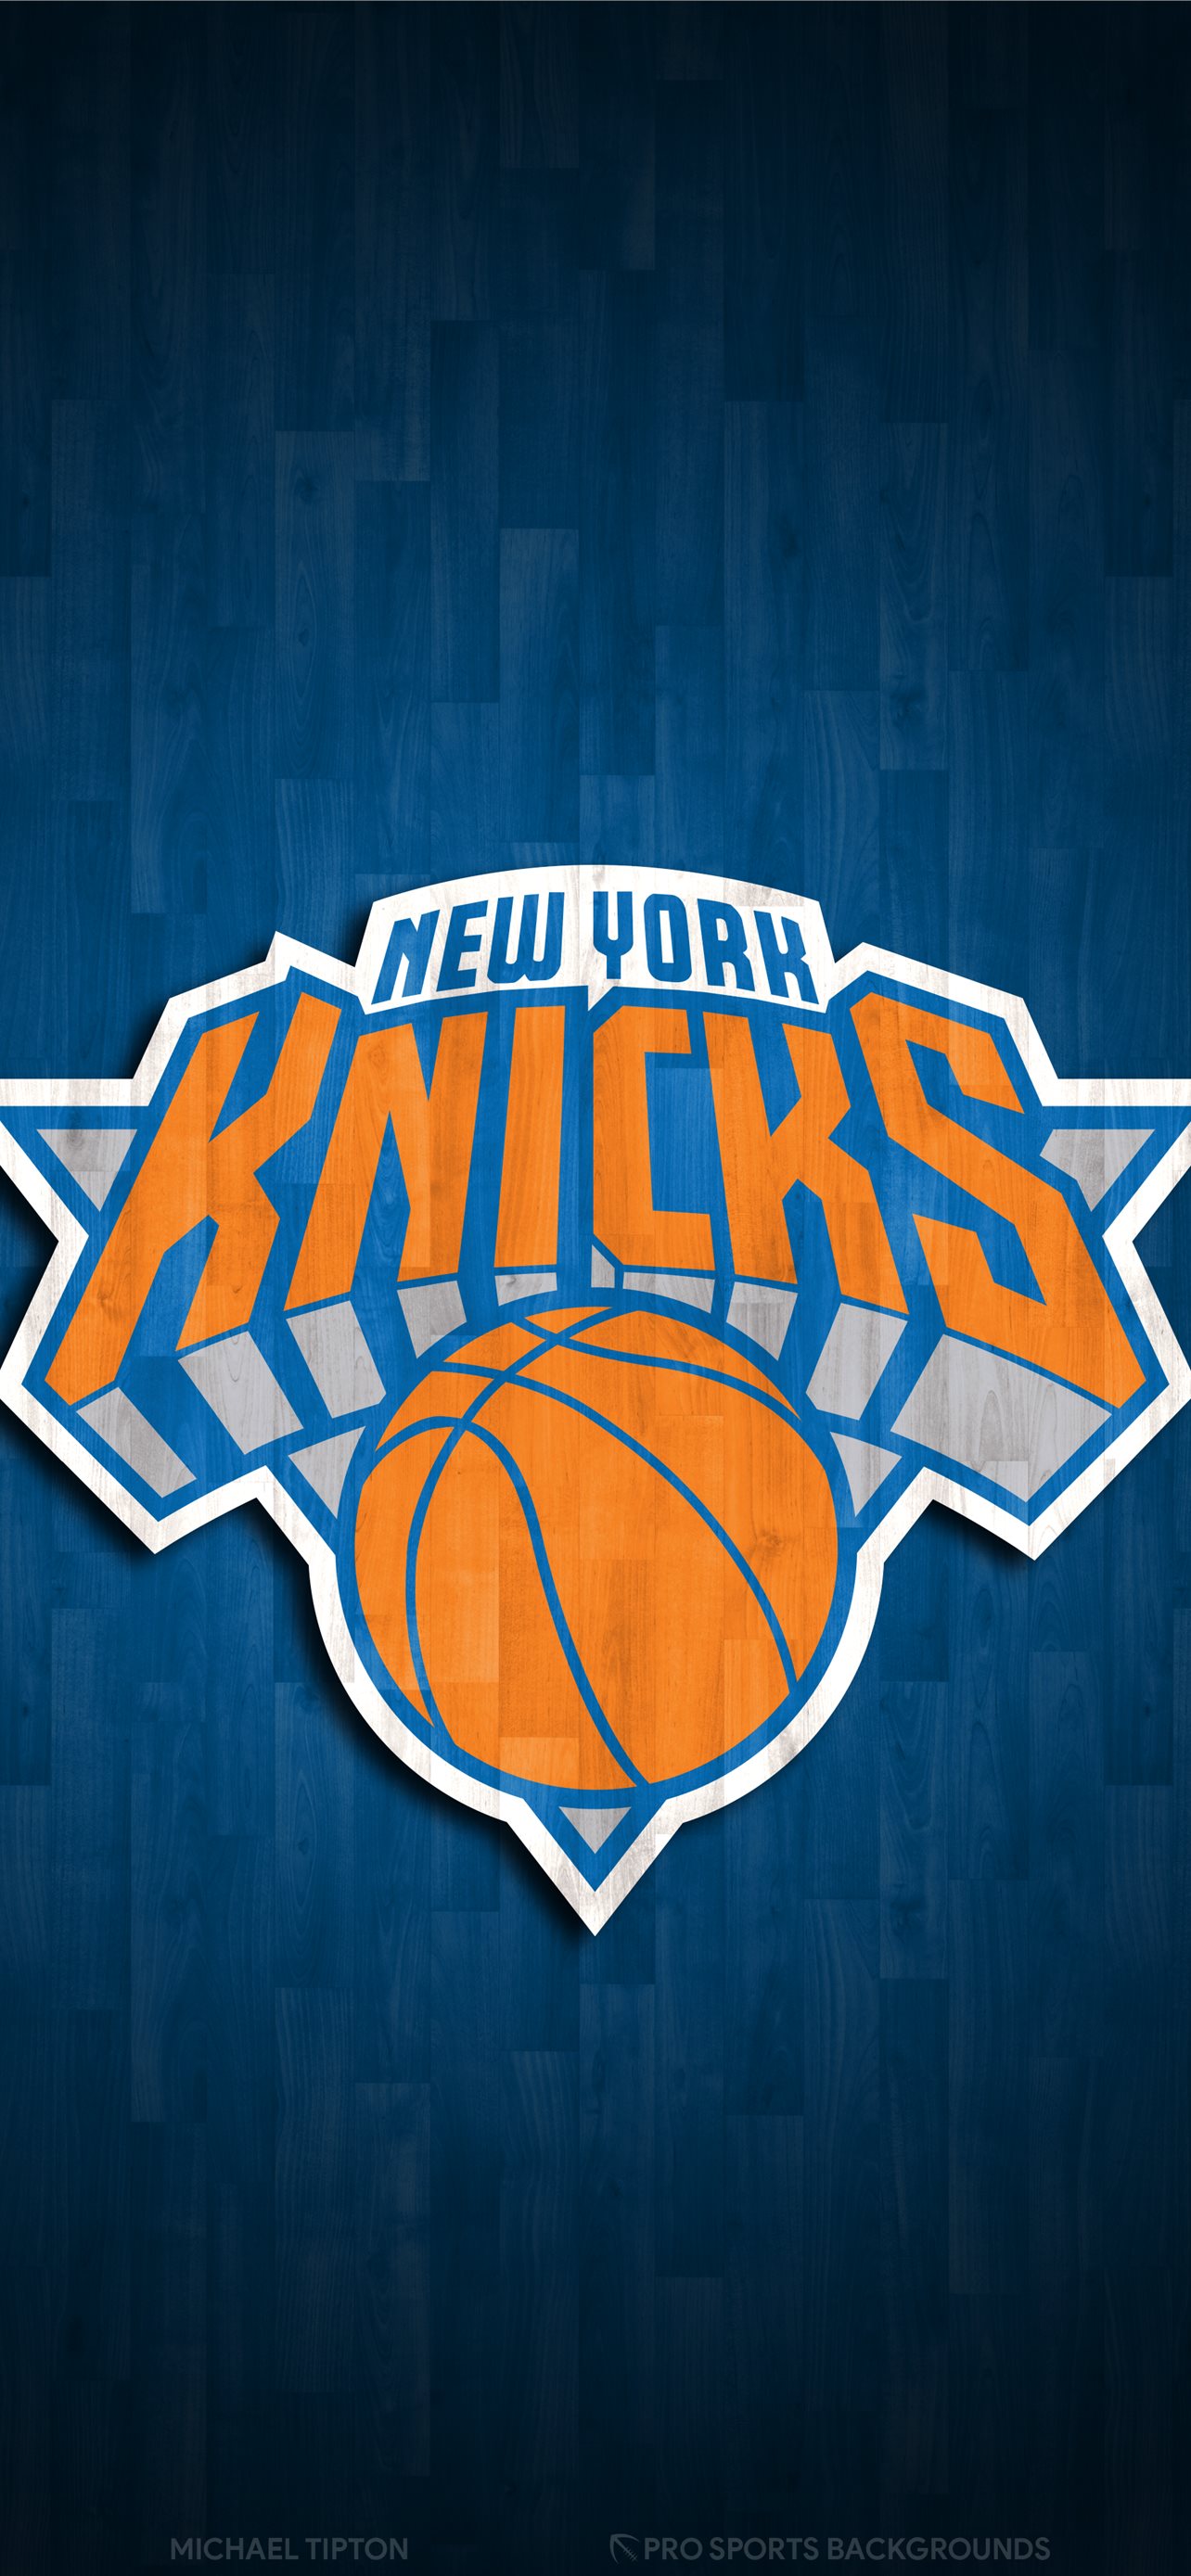 Knicks iPhone Wallpaper  WallpaperSafari  Knicks Knicks basketball  Sports wallpapers